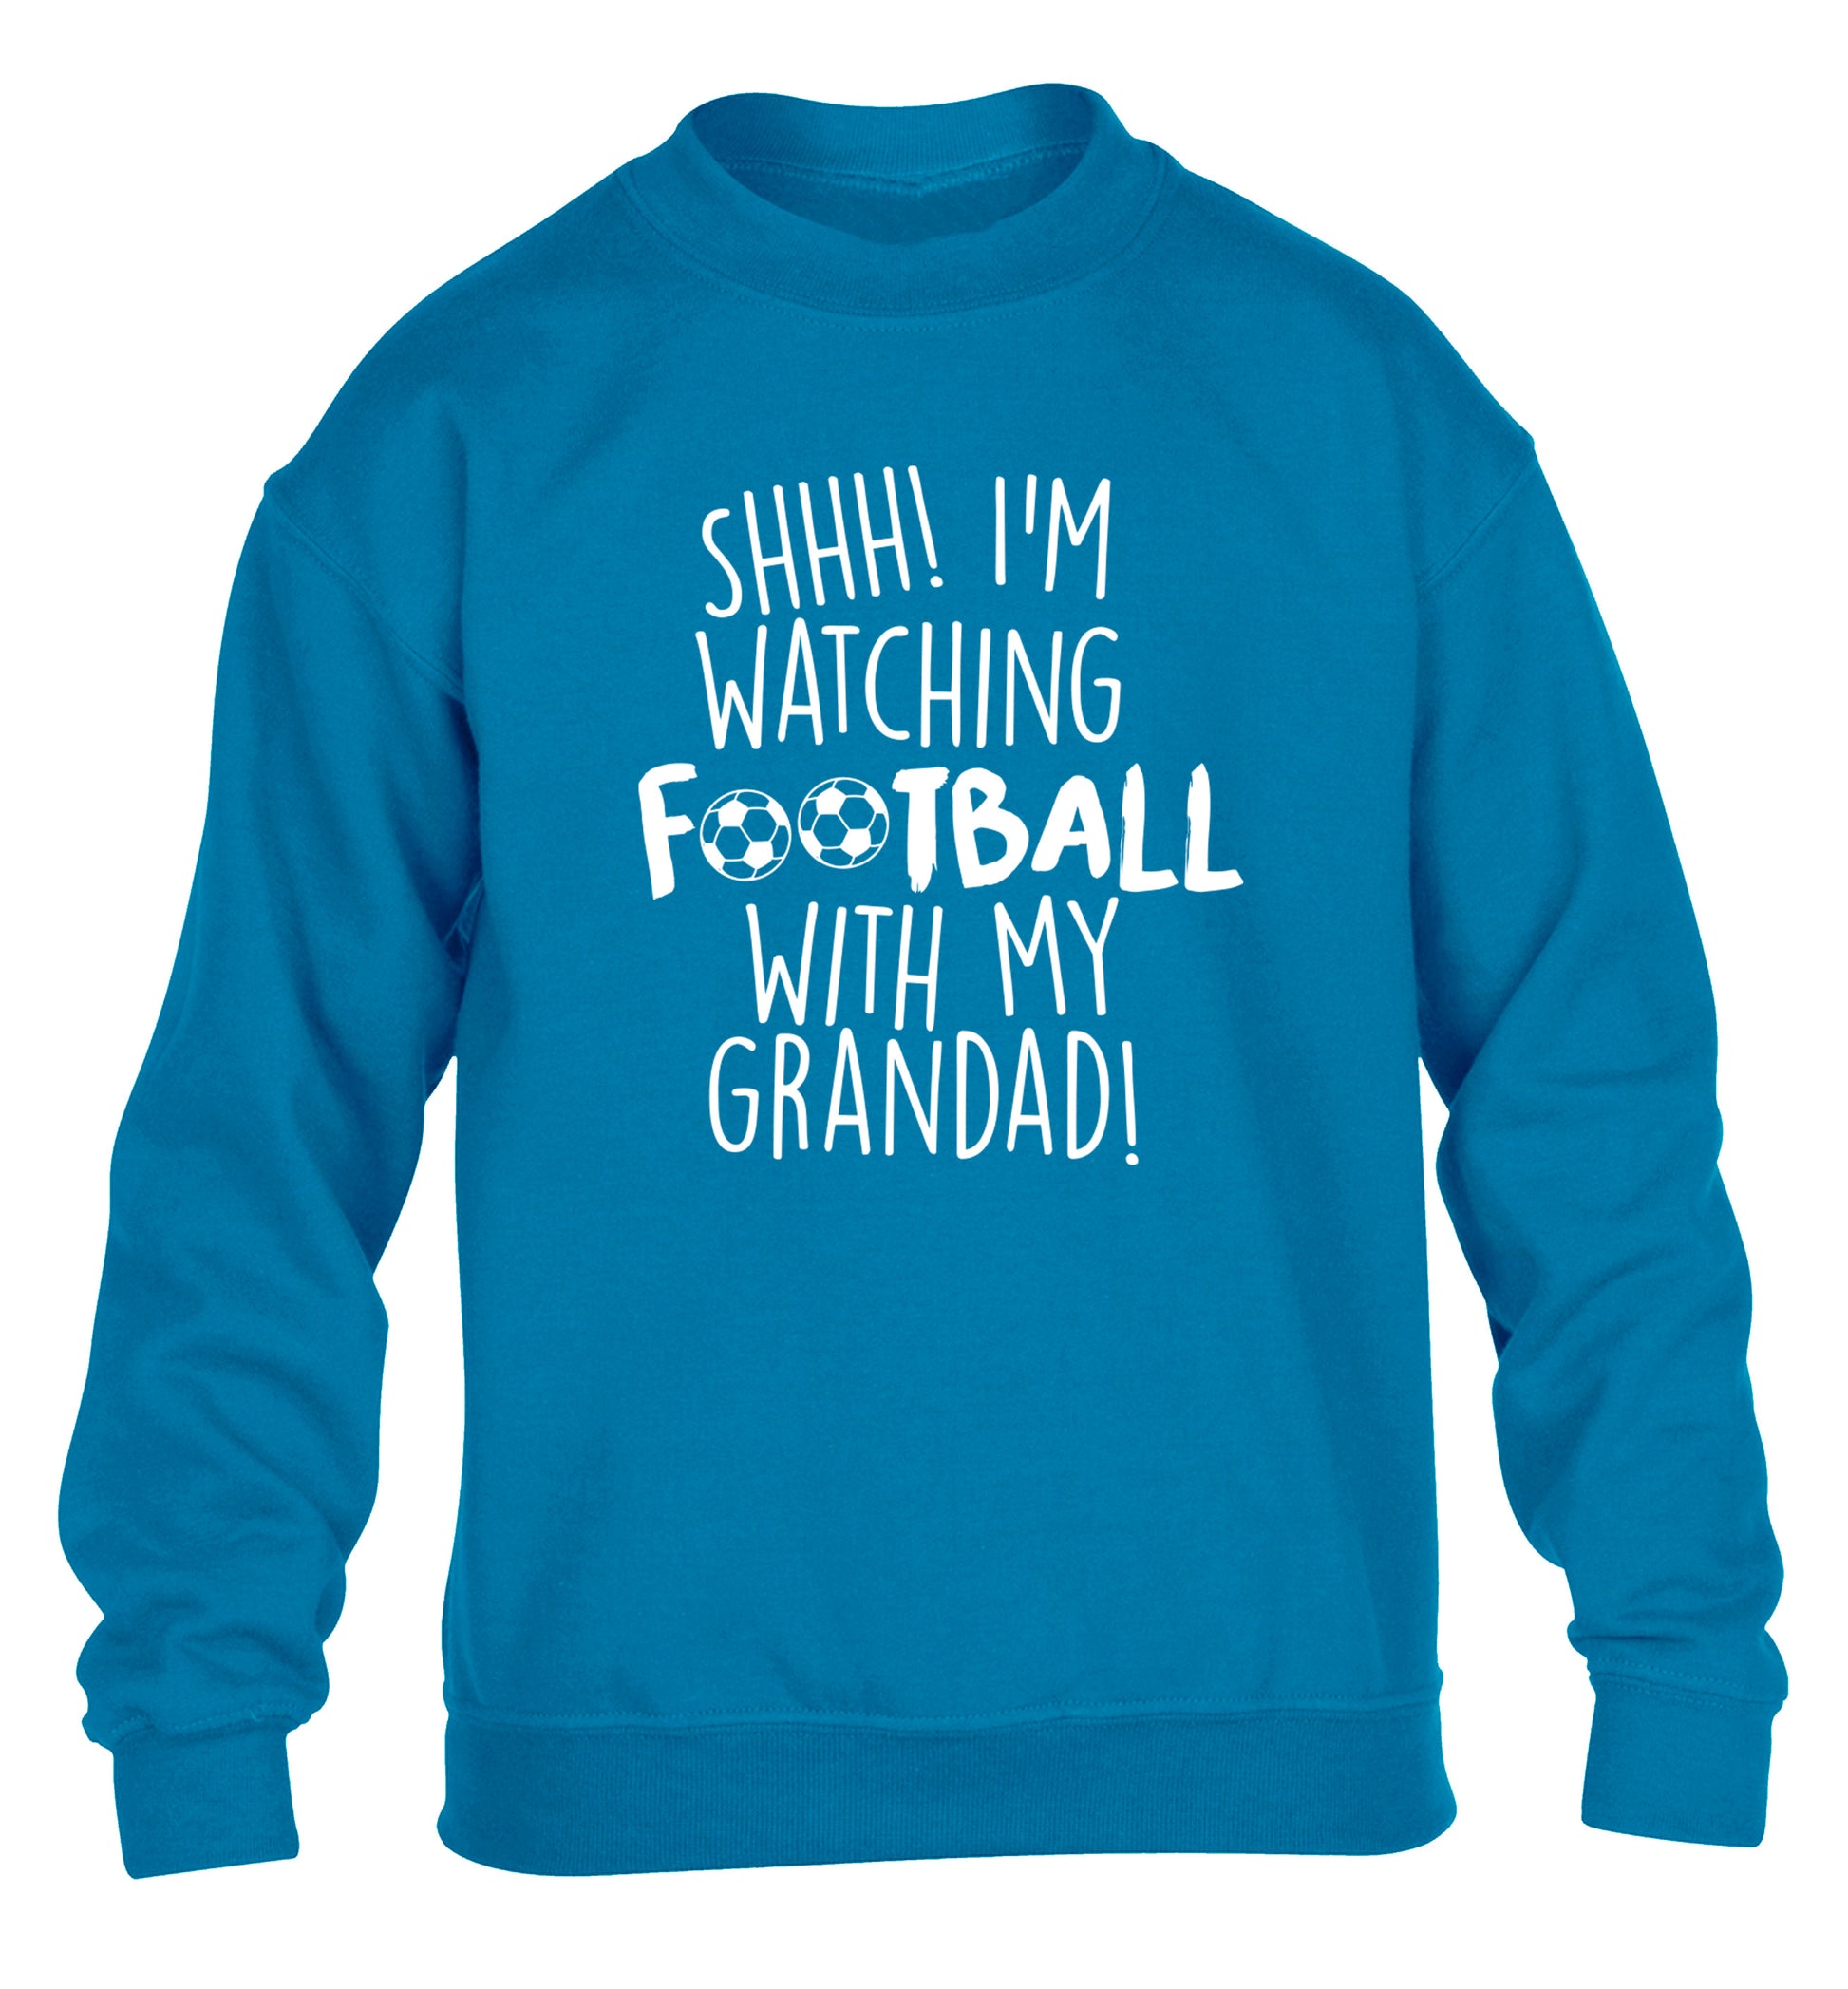 Shhh I'm watching football with my grandad children's blue sweater 12-14 Years